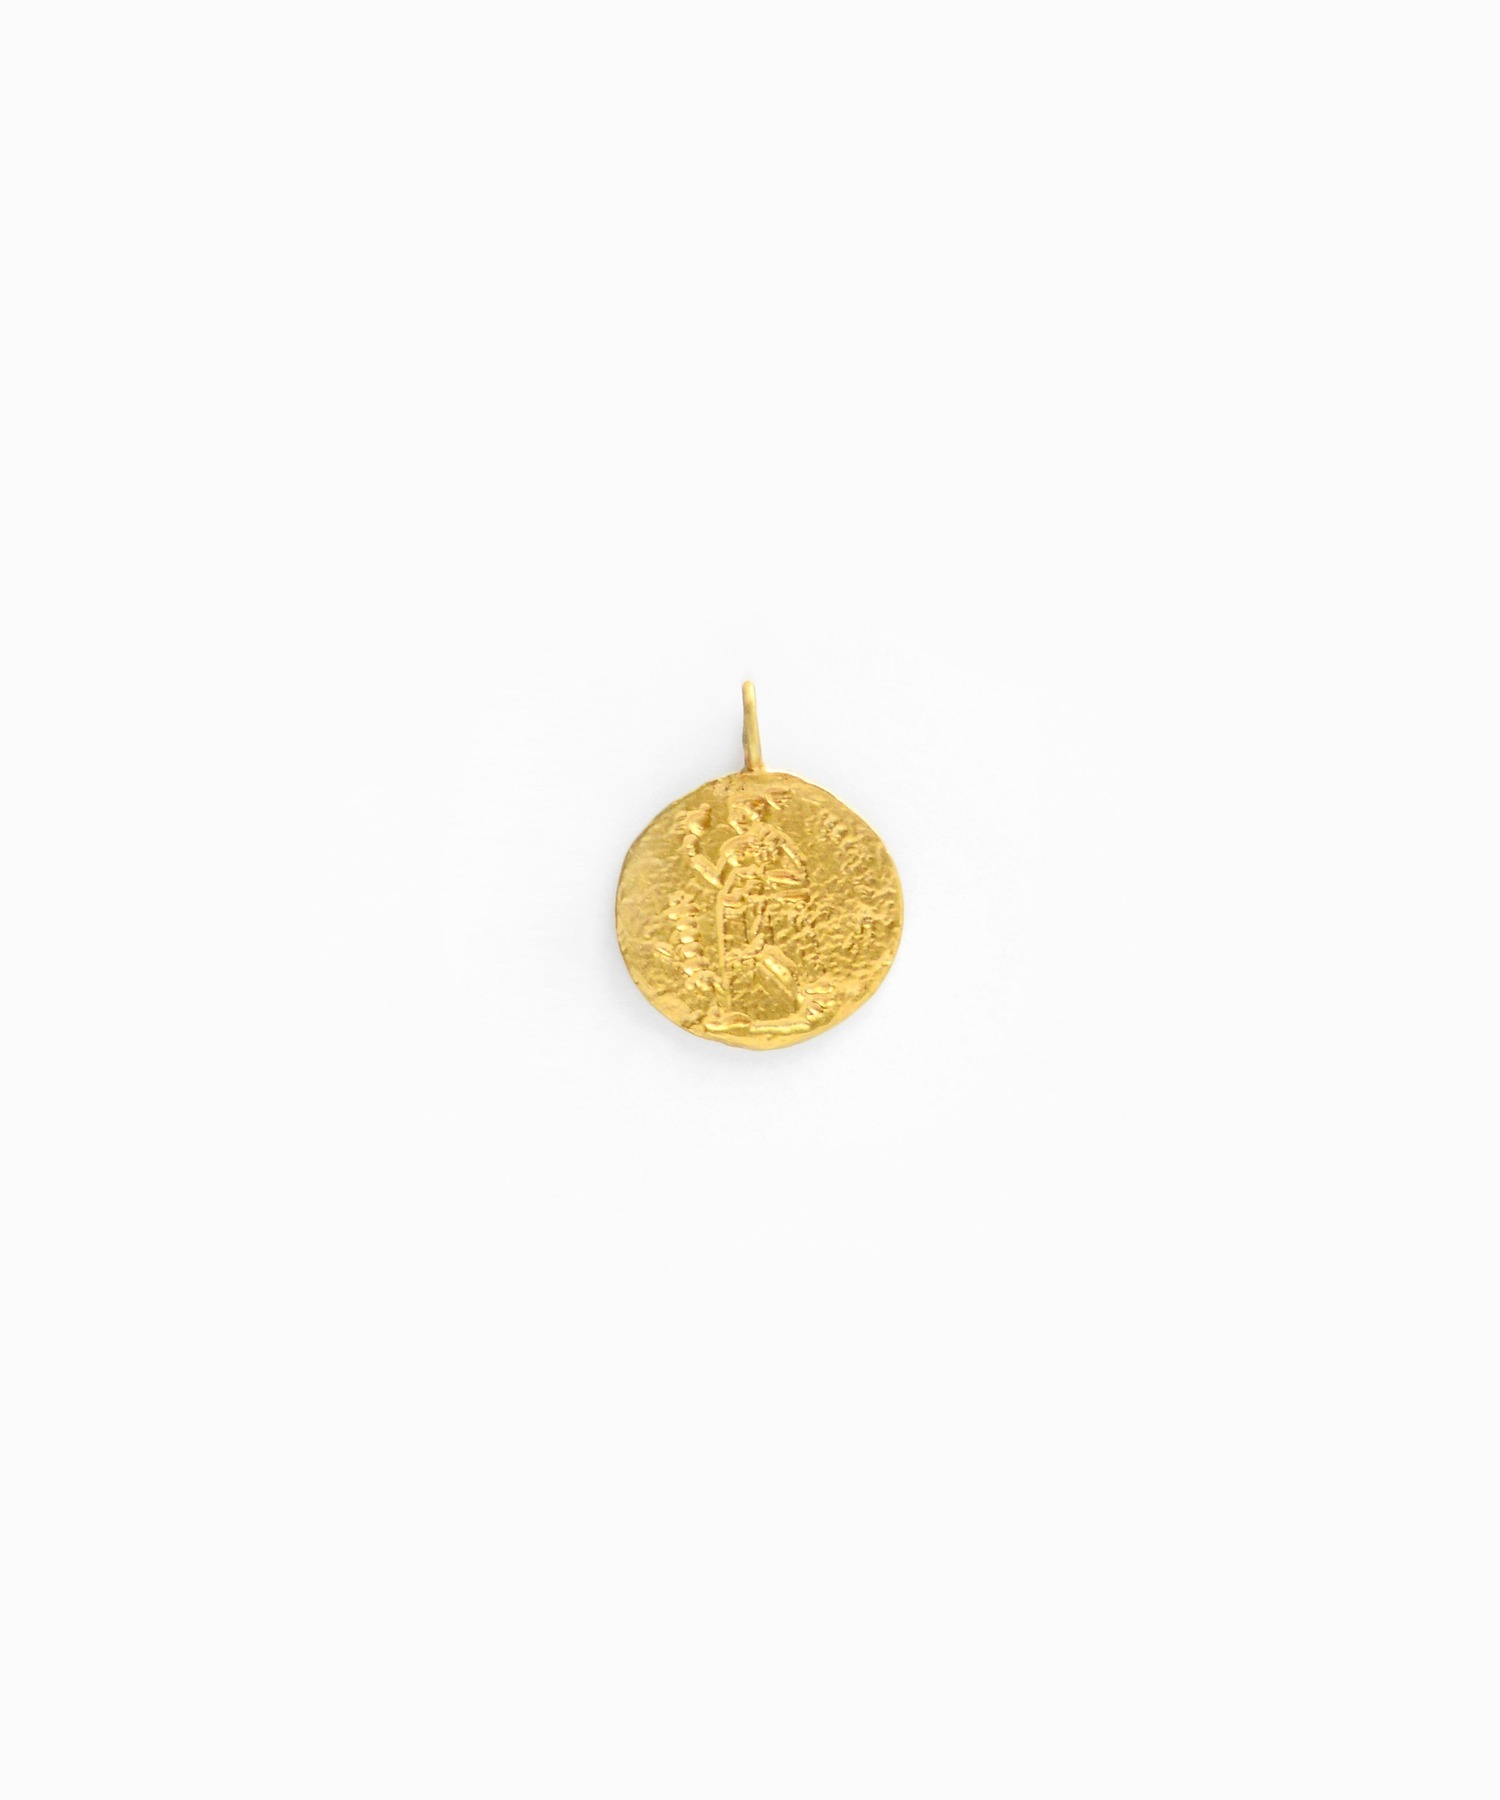 [ancient] ancient coin - GREEK charm